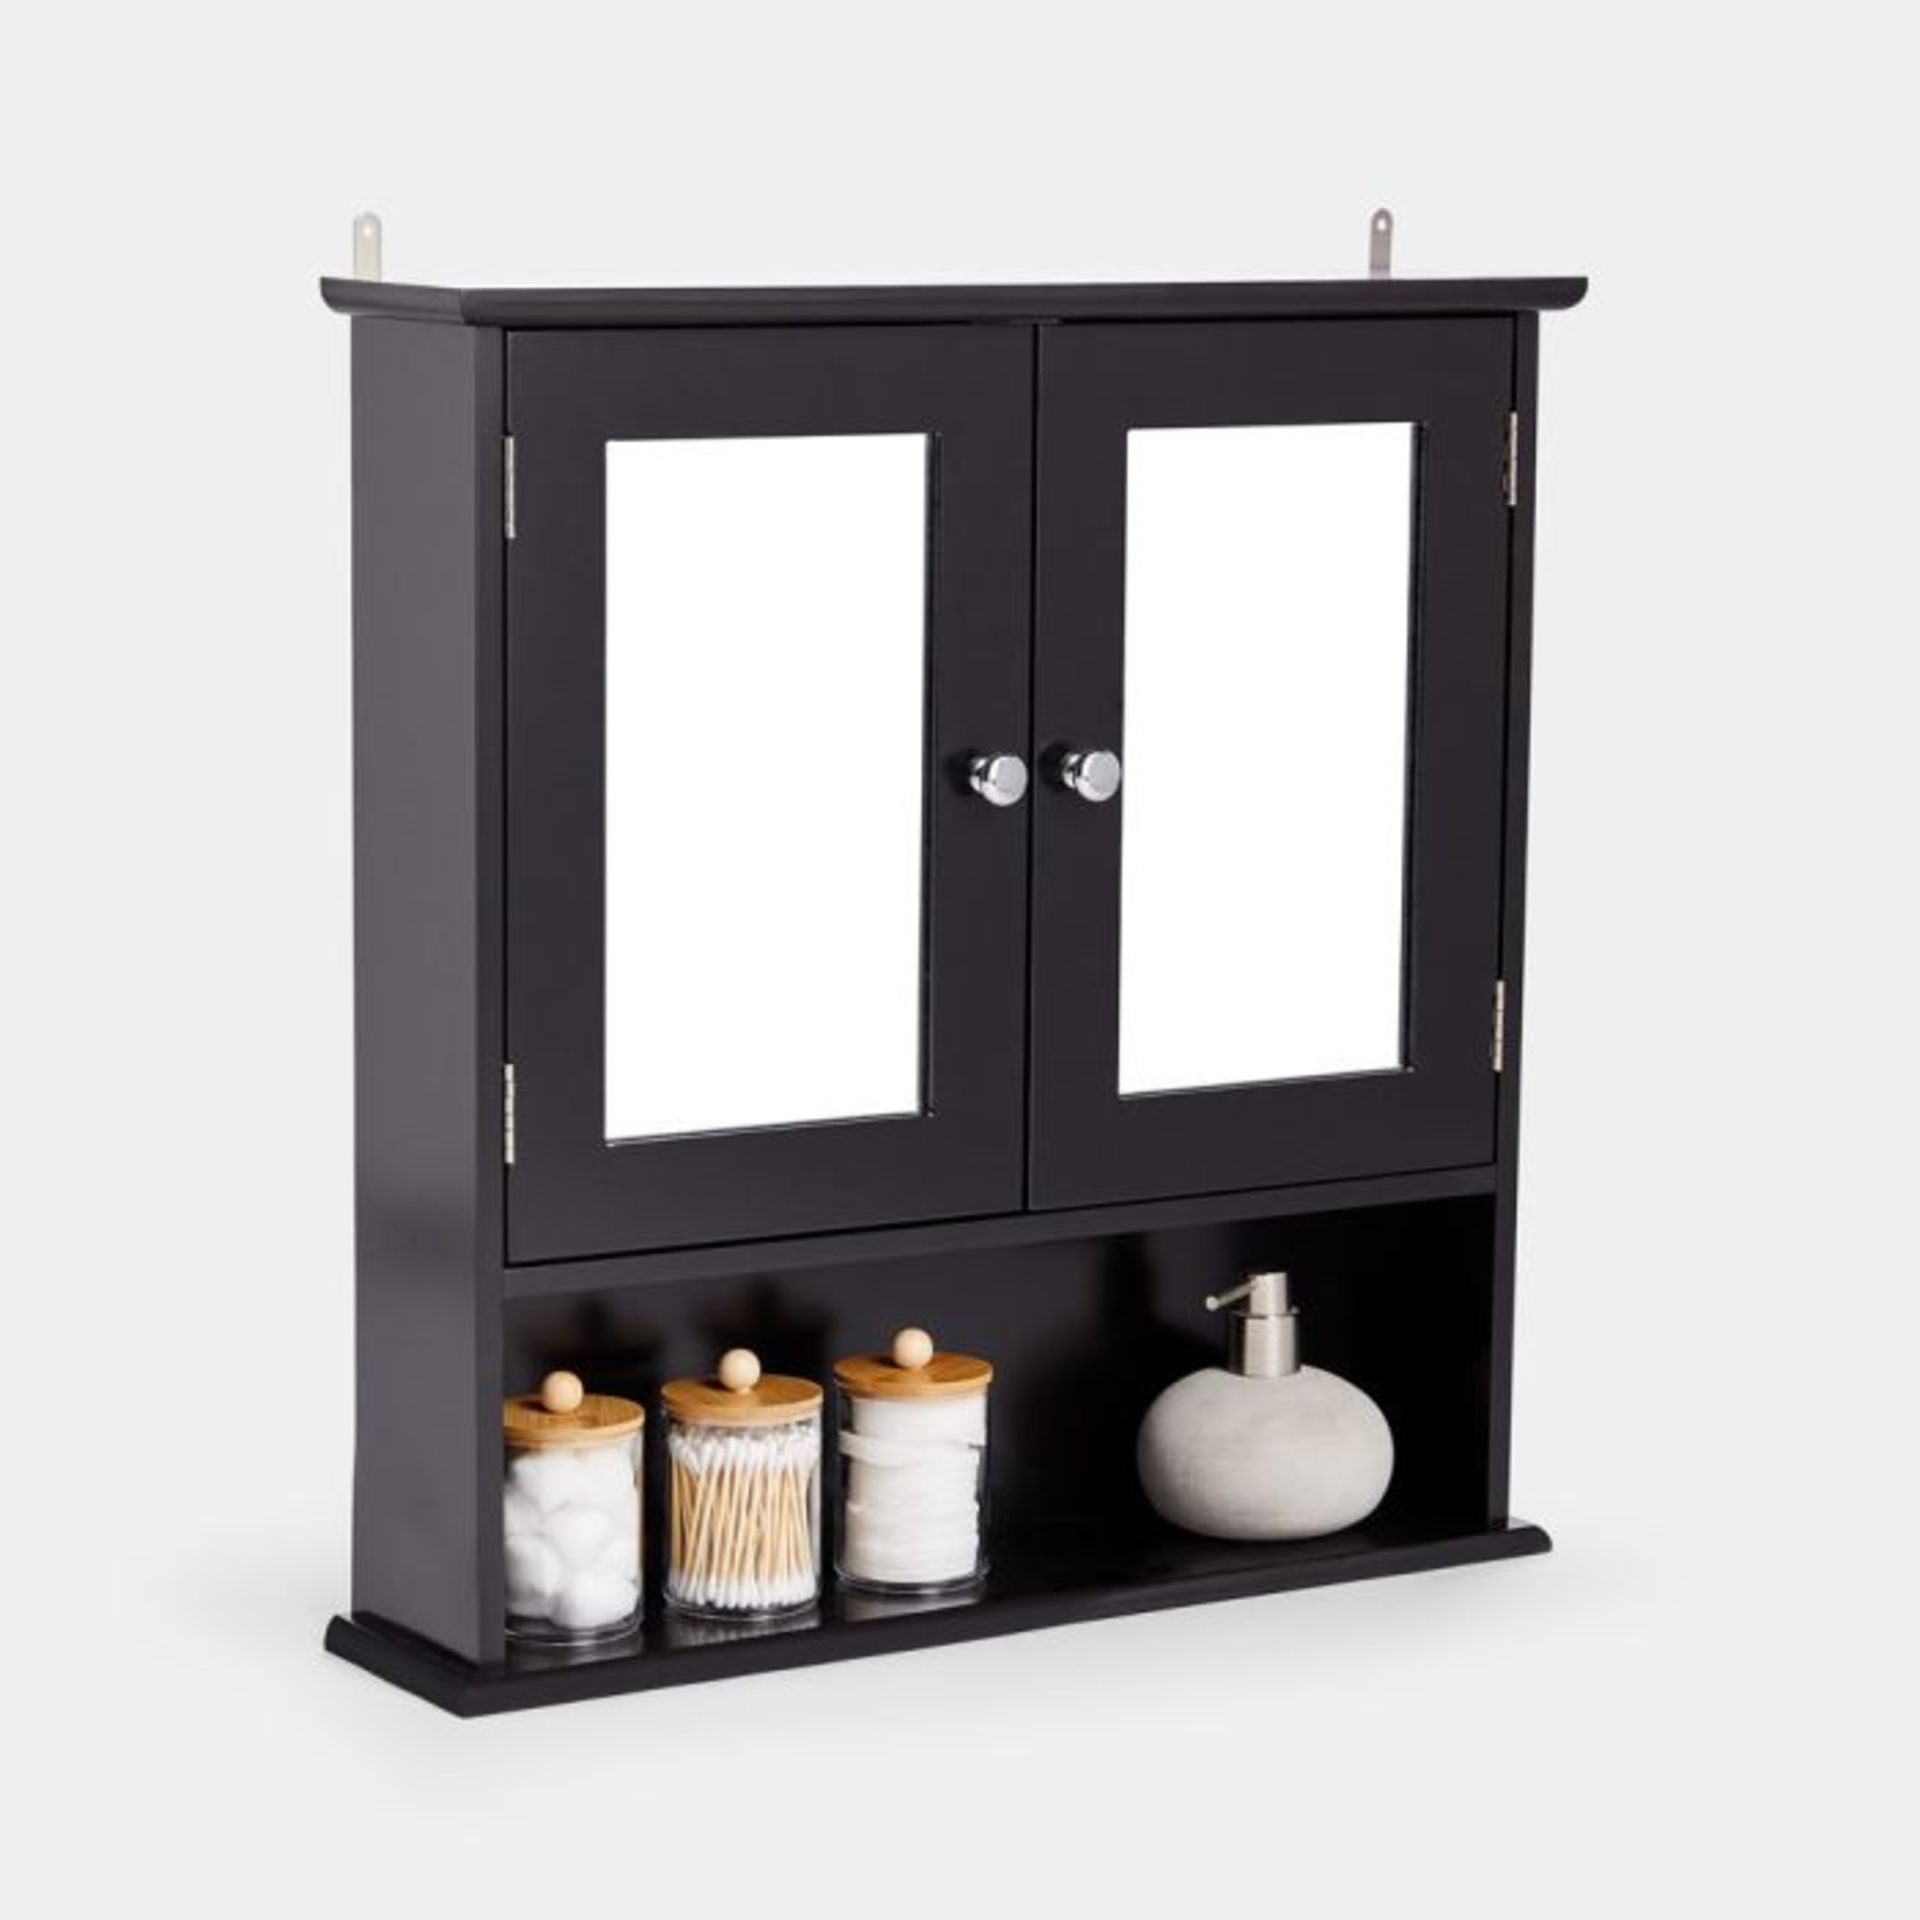 Shrewsbury Black Mirrored Bathroom Cabinet. - ER37. The combination of three internal shelves